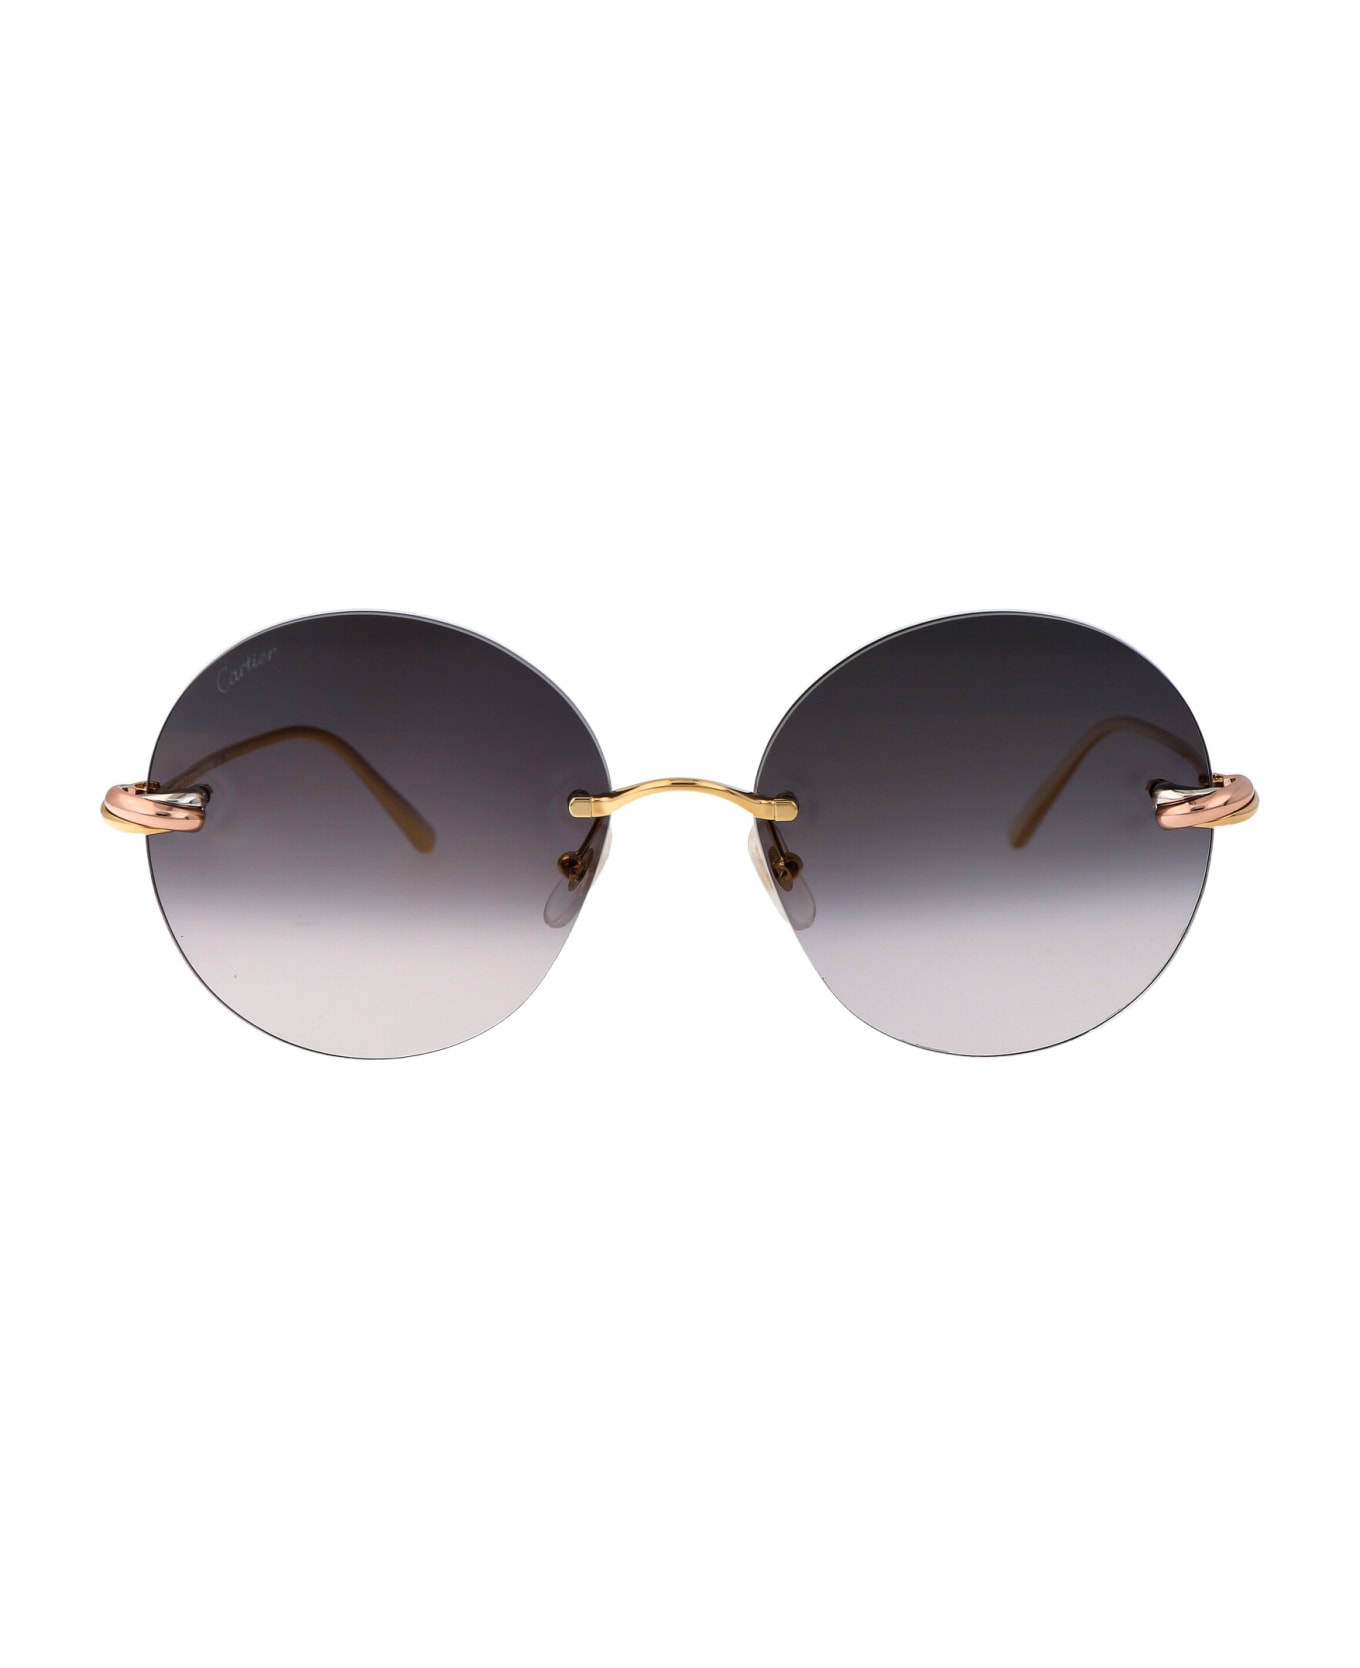 Cartier Eyewear Ct0475s Sunglasses - 001 GOLD GOLD GREY